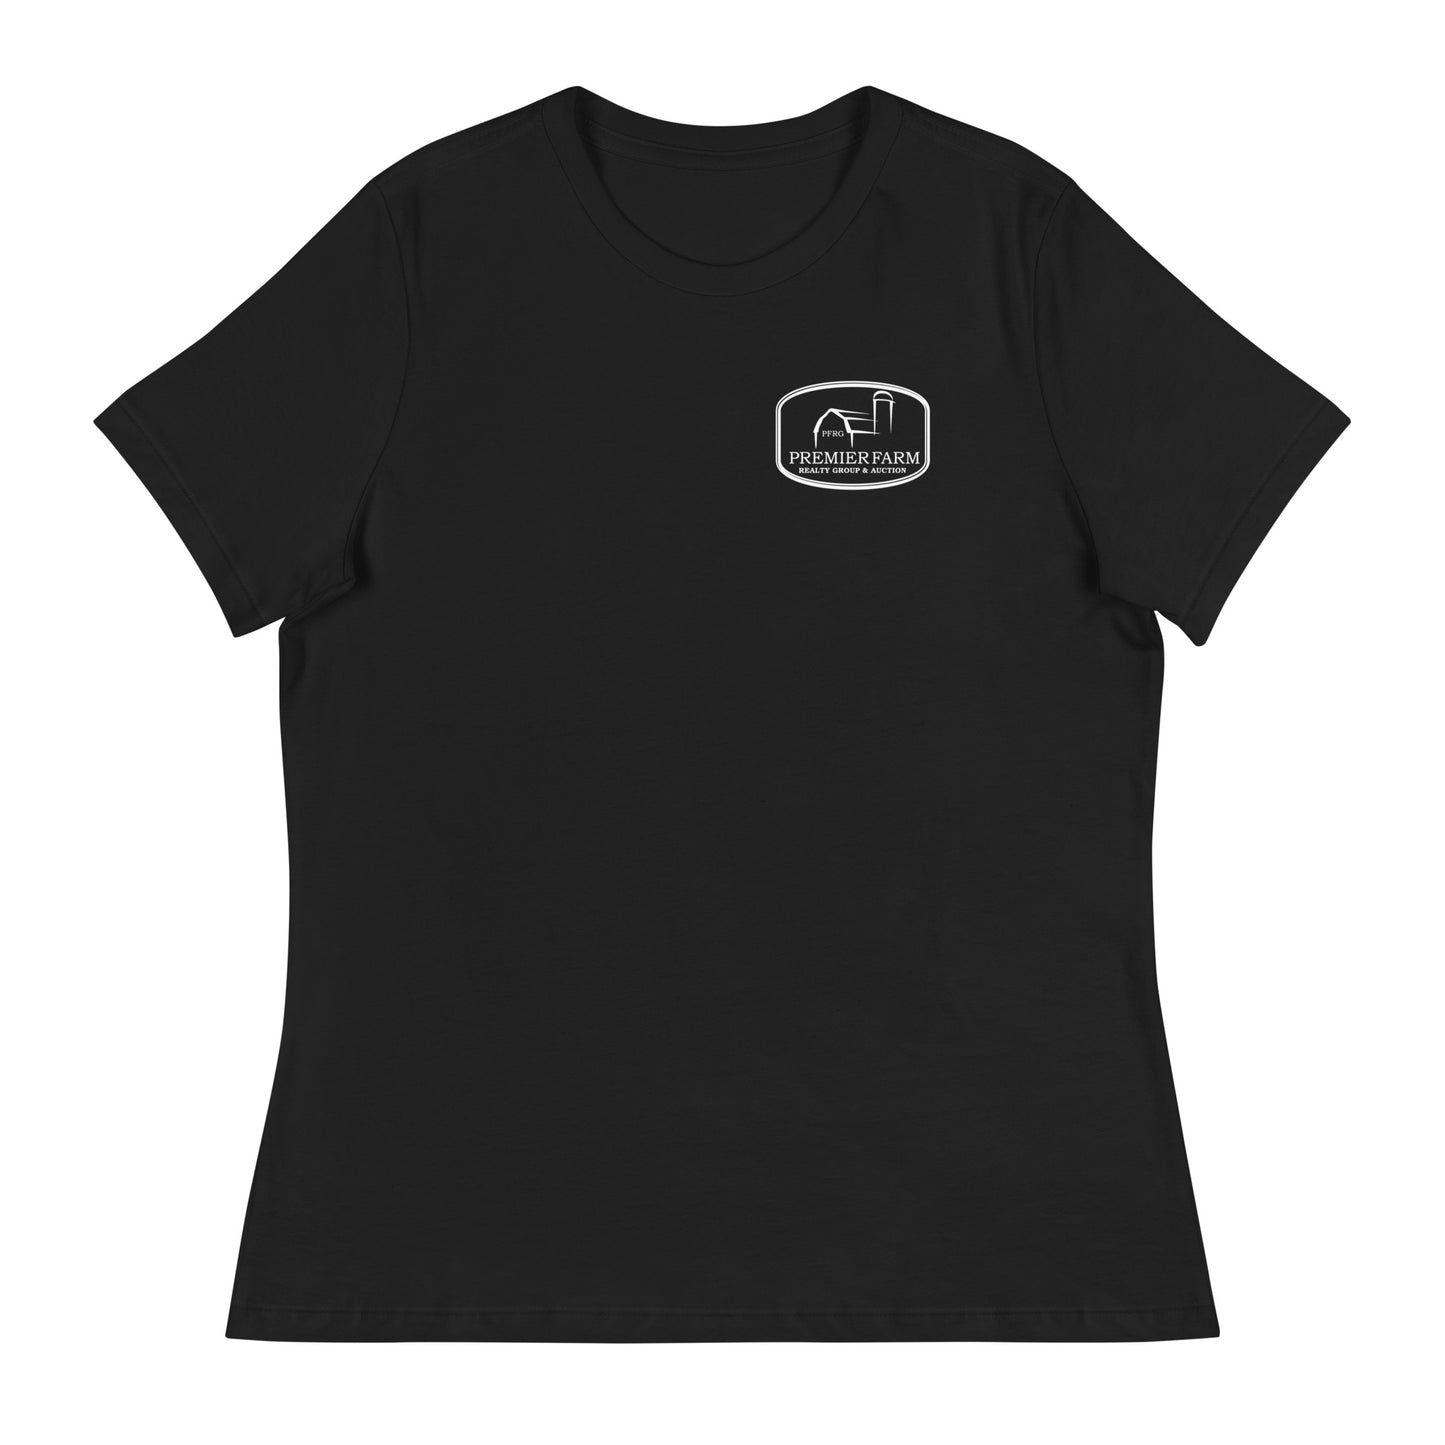 Women's Classic T-shirt - Farm